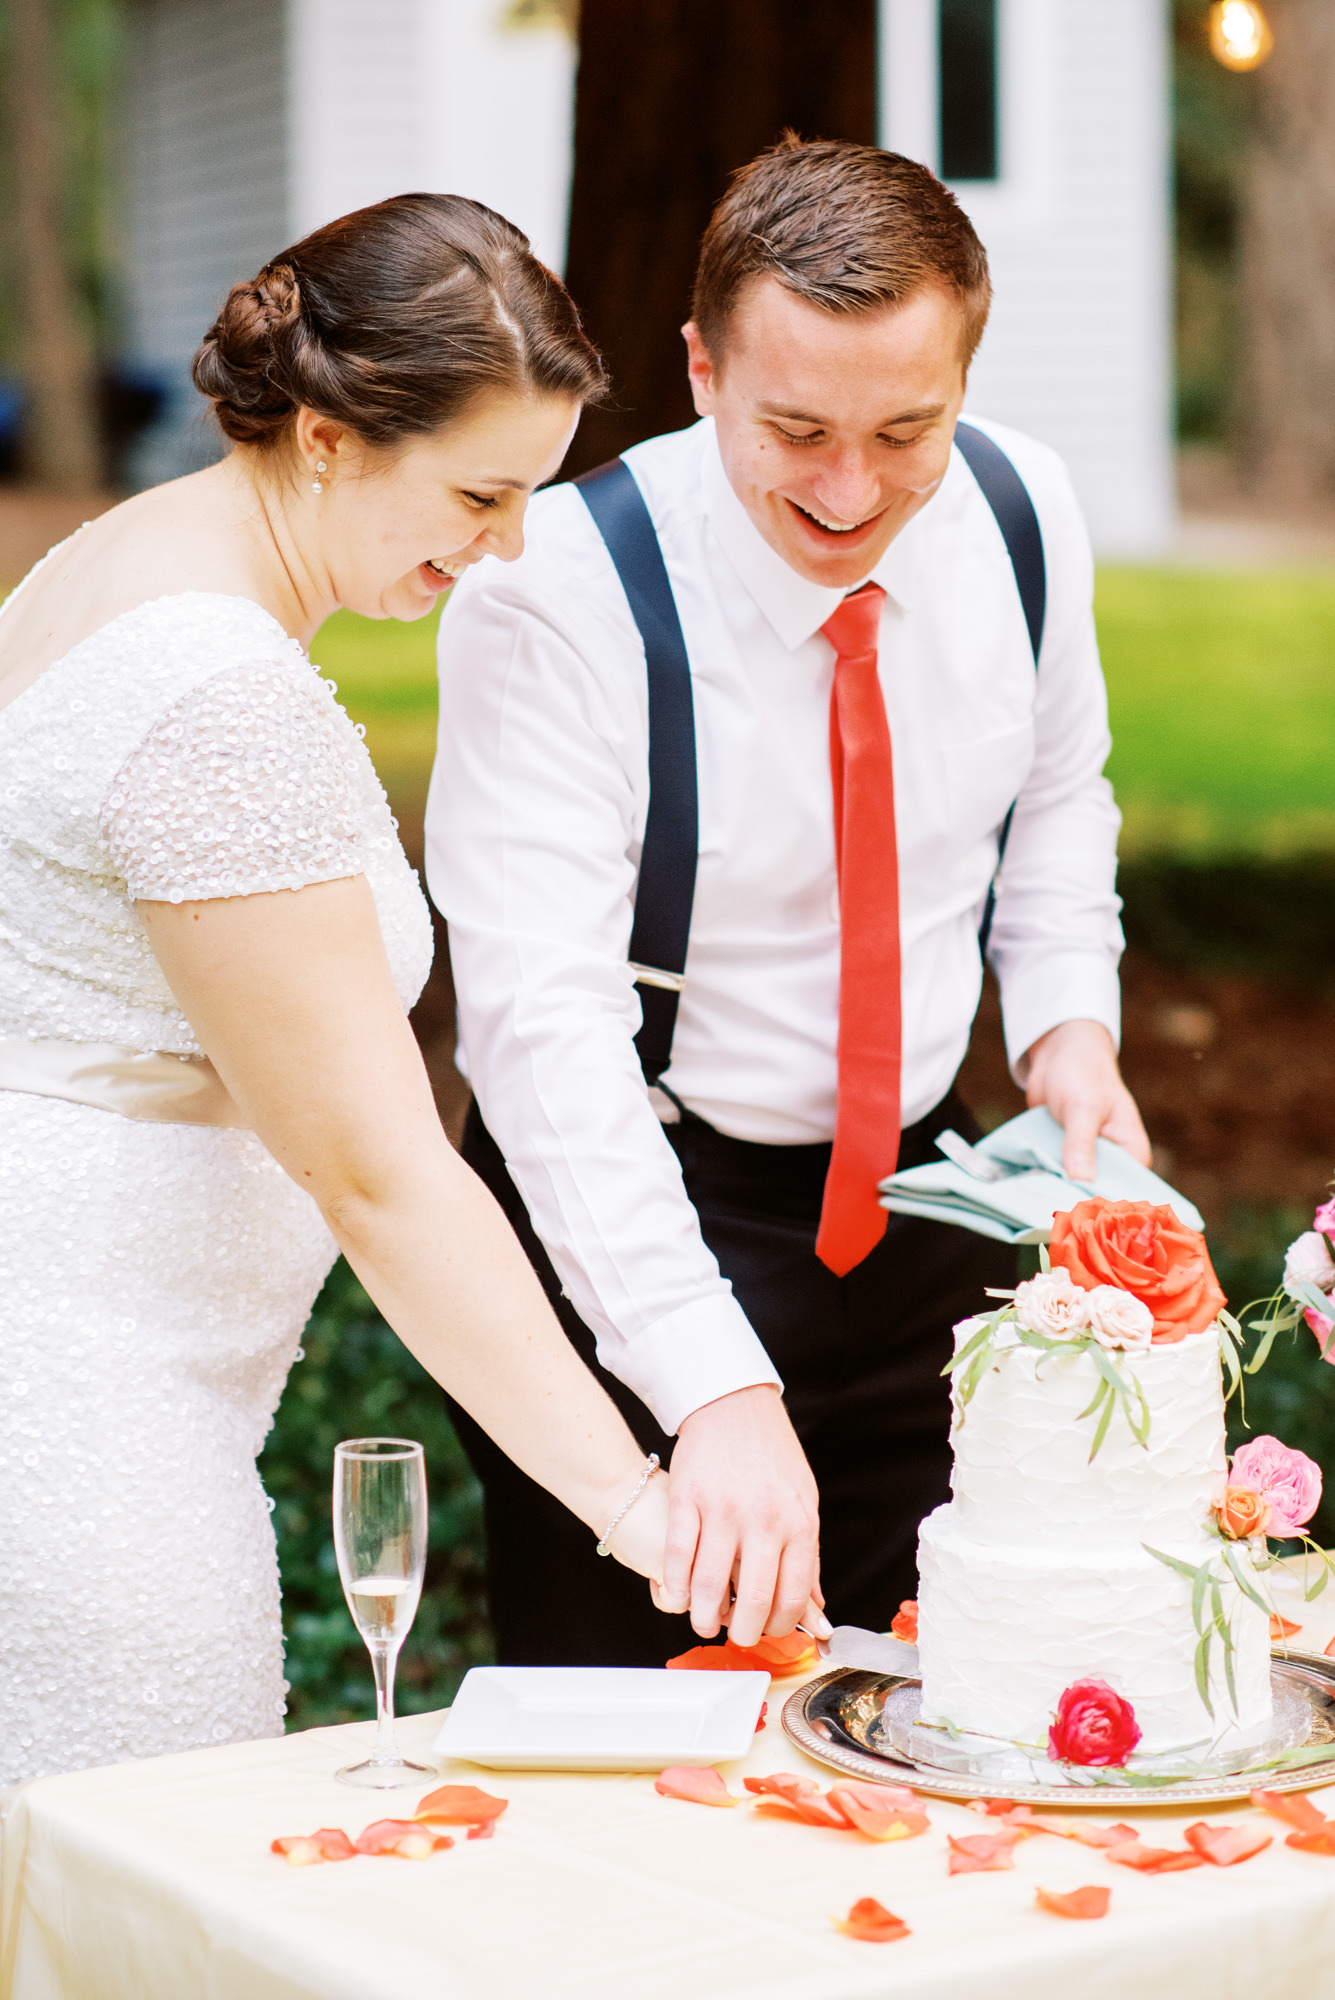 Seattle Backyard Wedding: Hannah and Jacob wedding reception moments